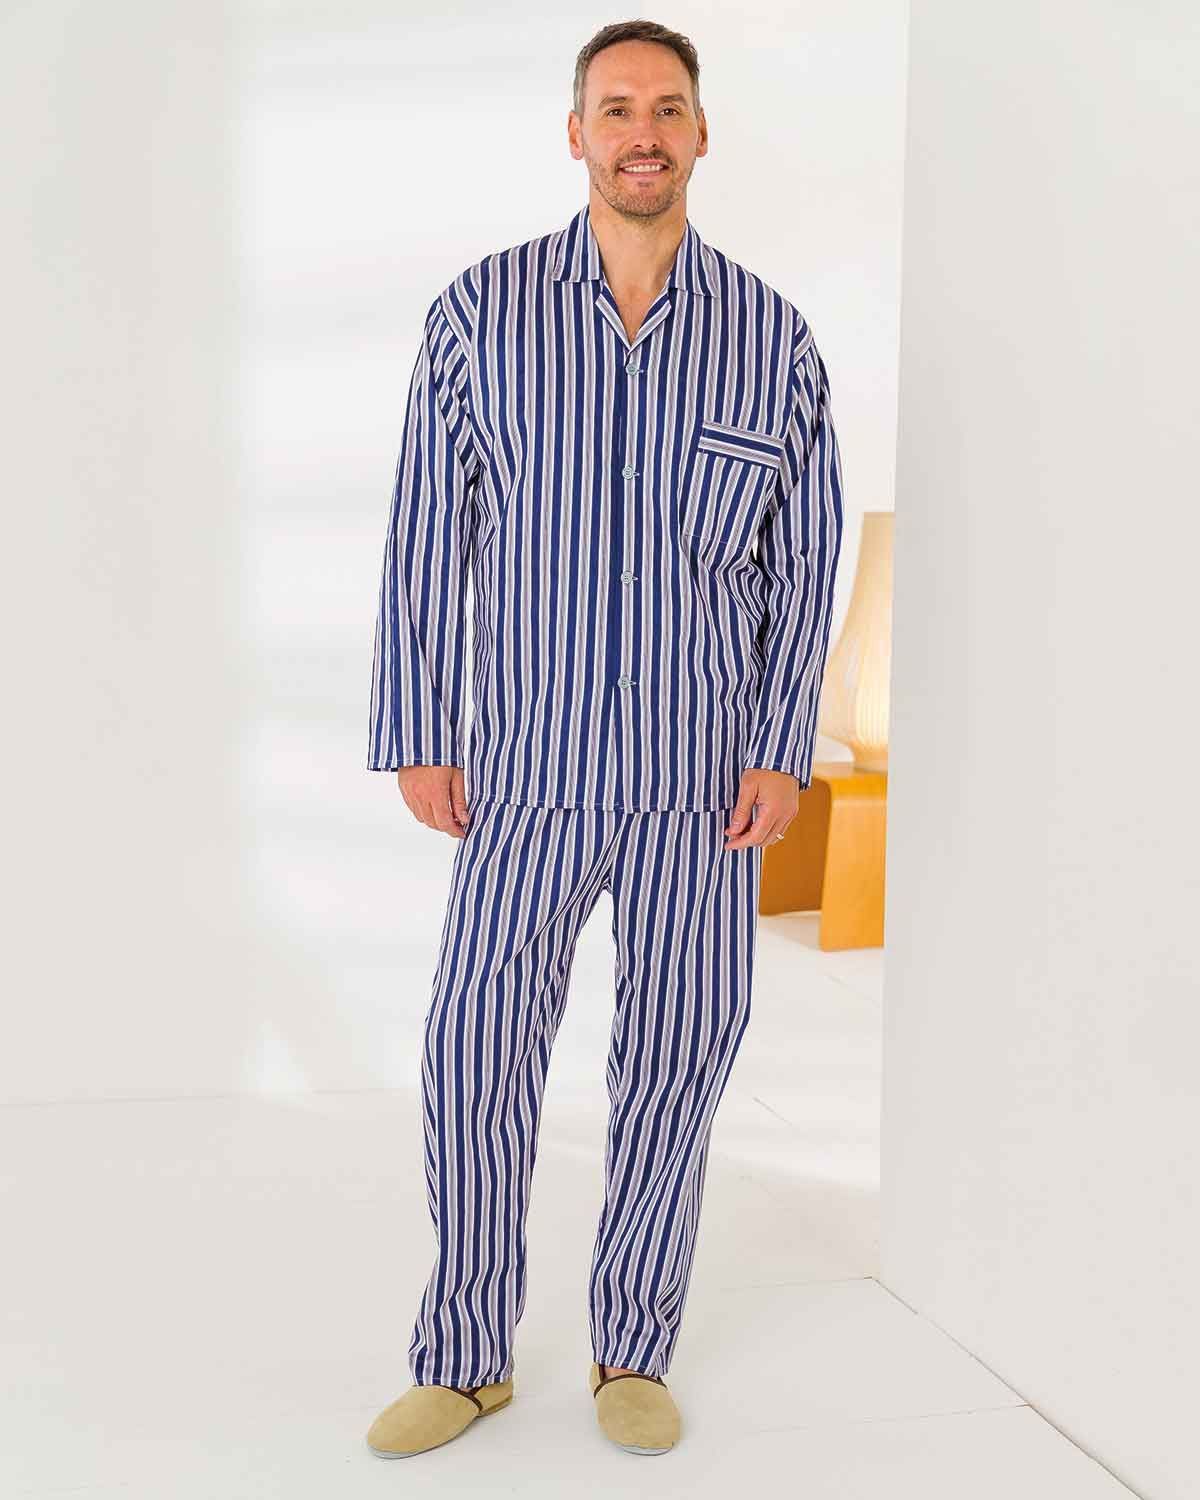 Buy Mens Pyjamas & Cotton Pyjamas For Men - Apella